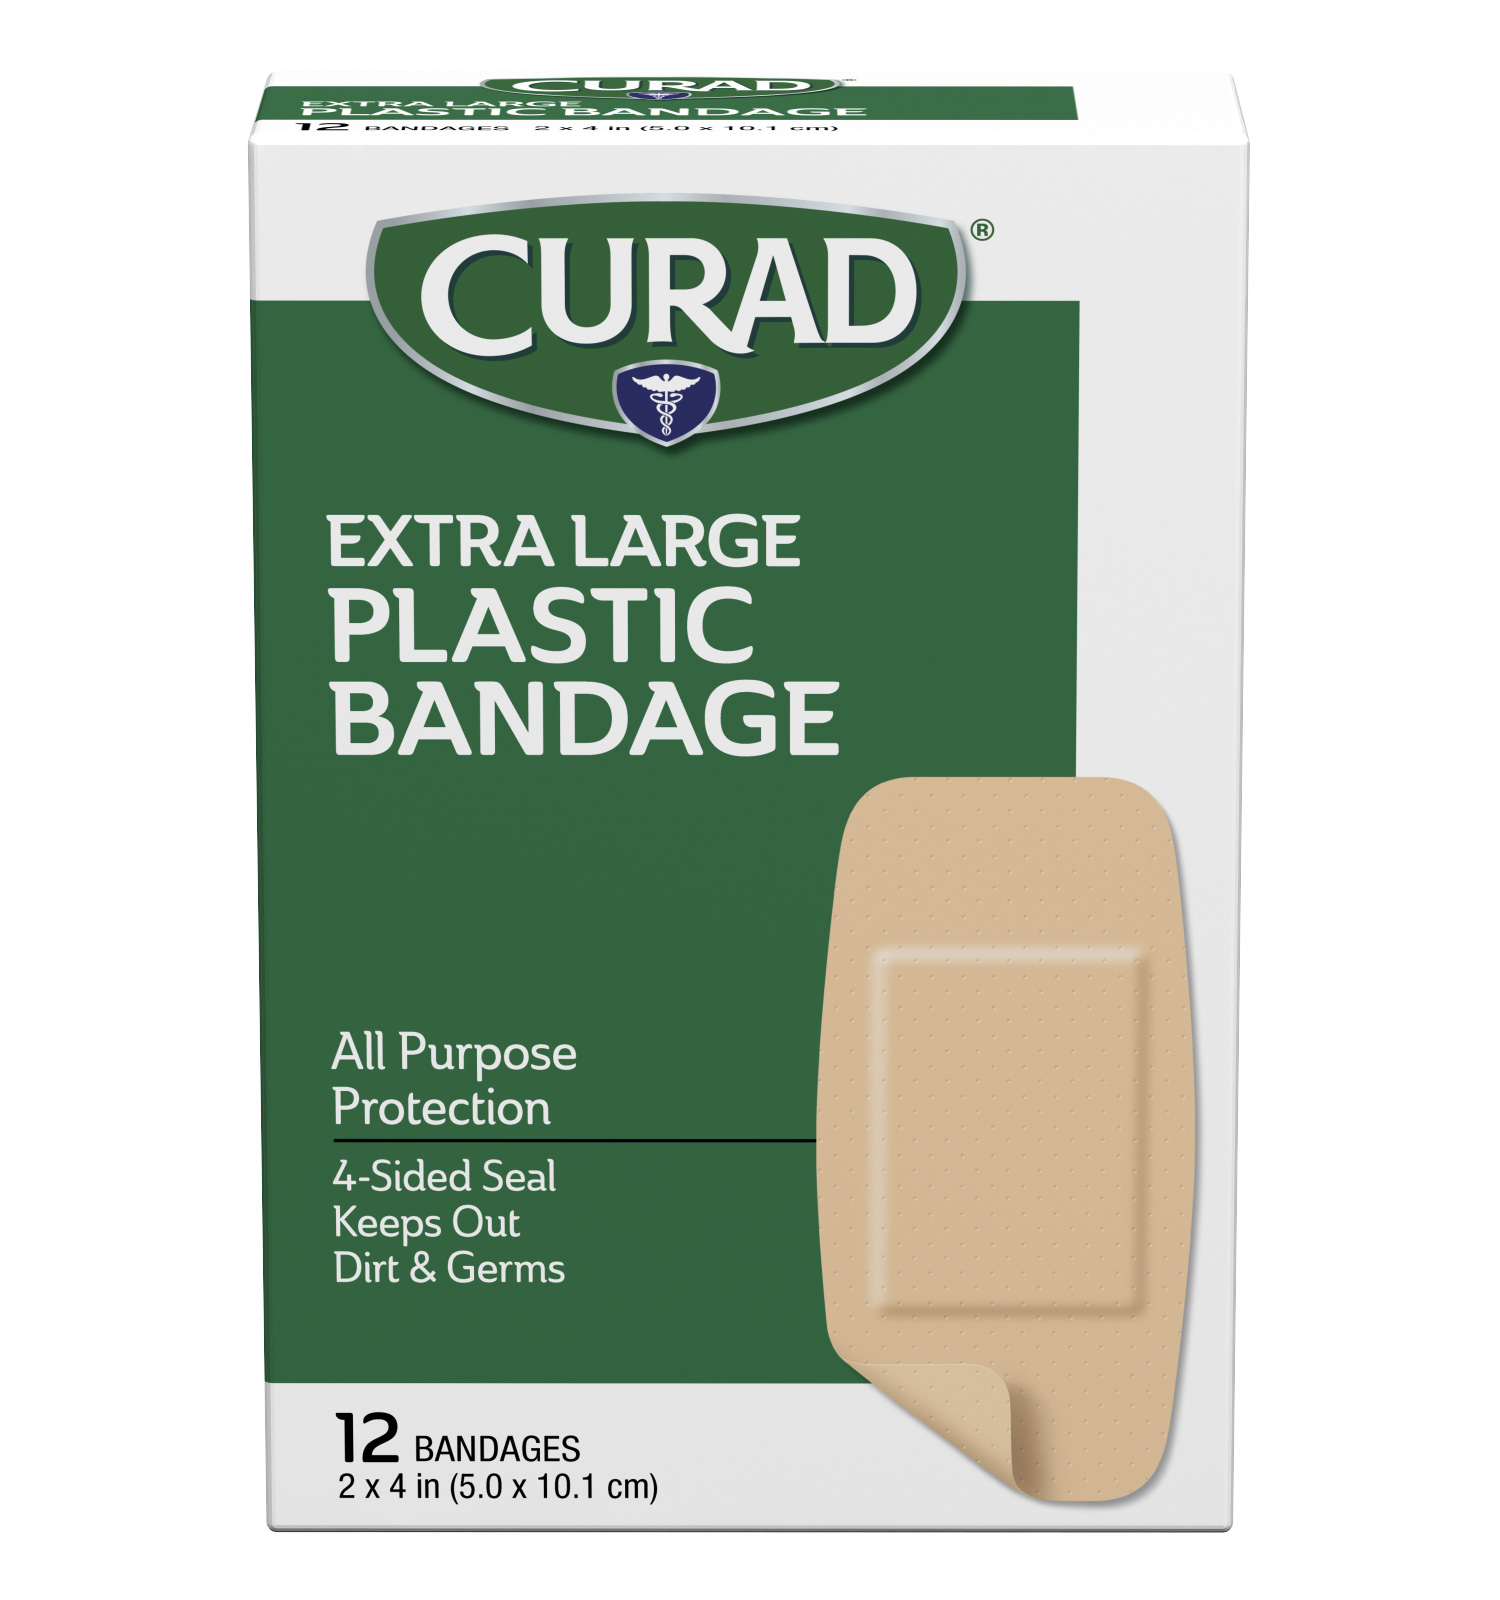 CURAD Plastic Adhesive Bandages 3/4x3 100Ct